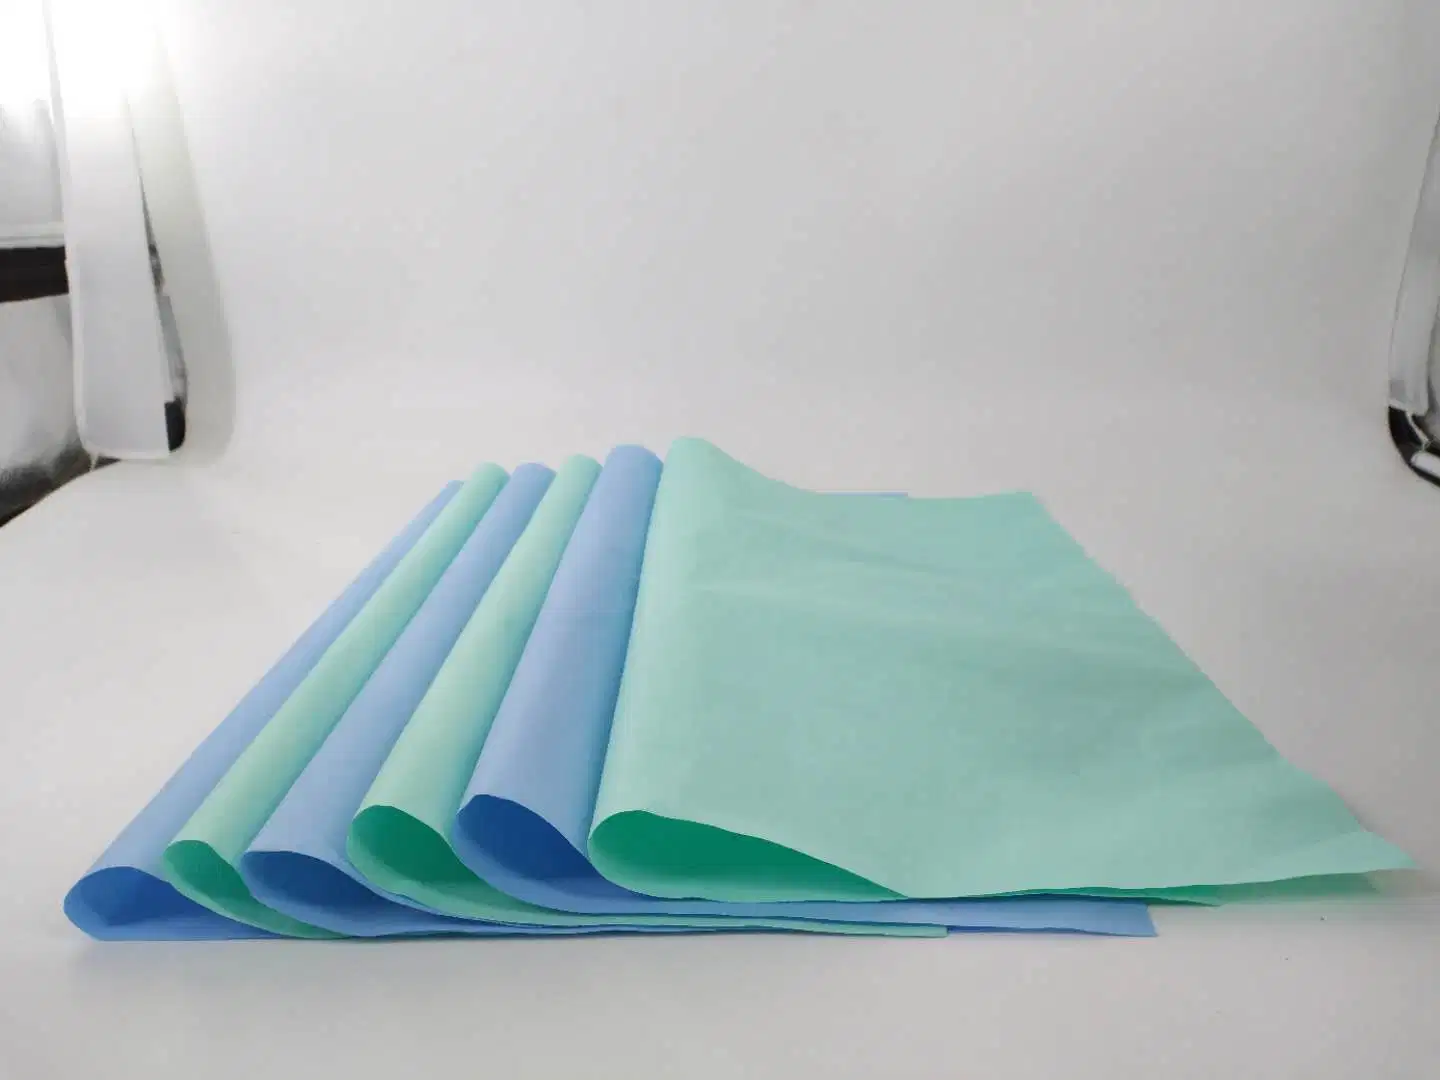 Paquete de papel de crepé desechable para esterilización médica